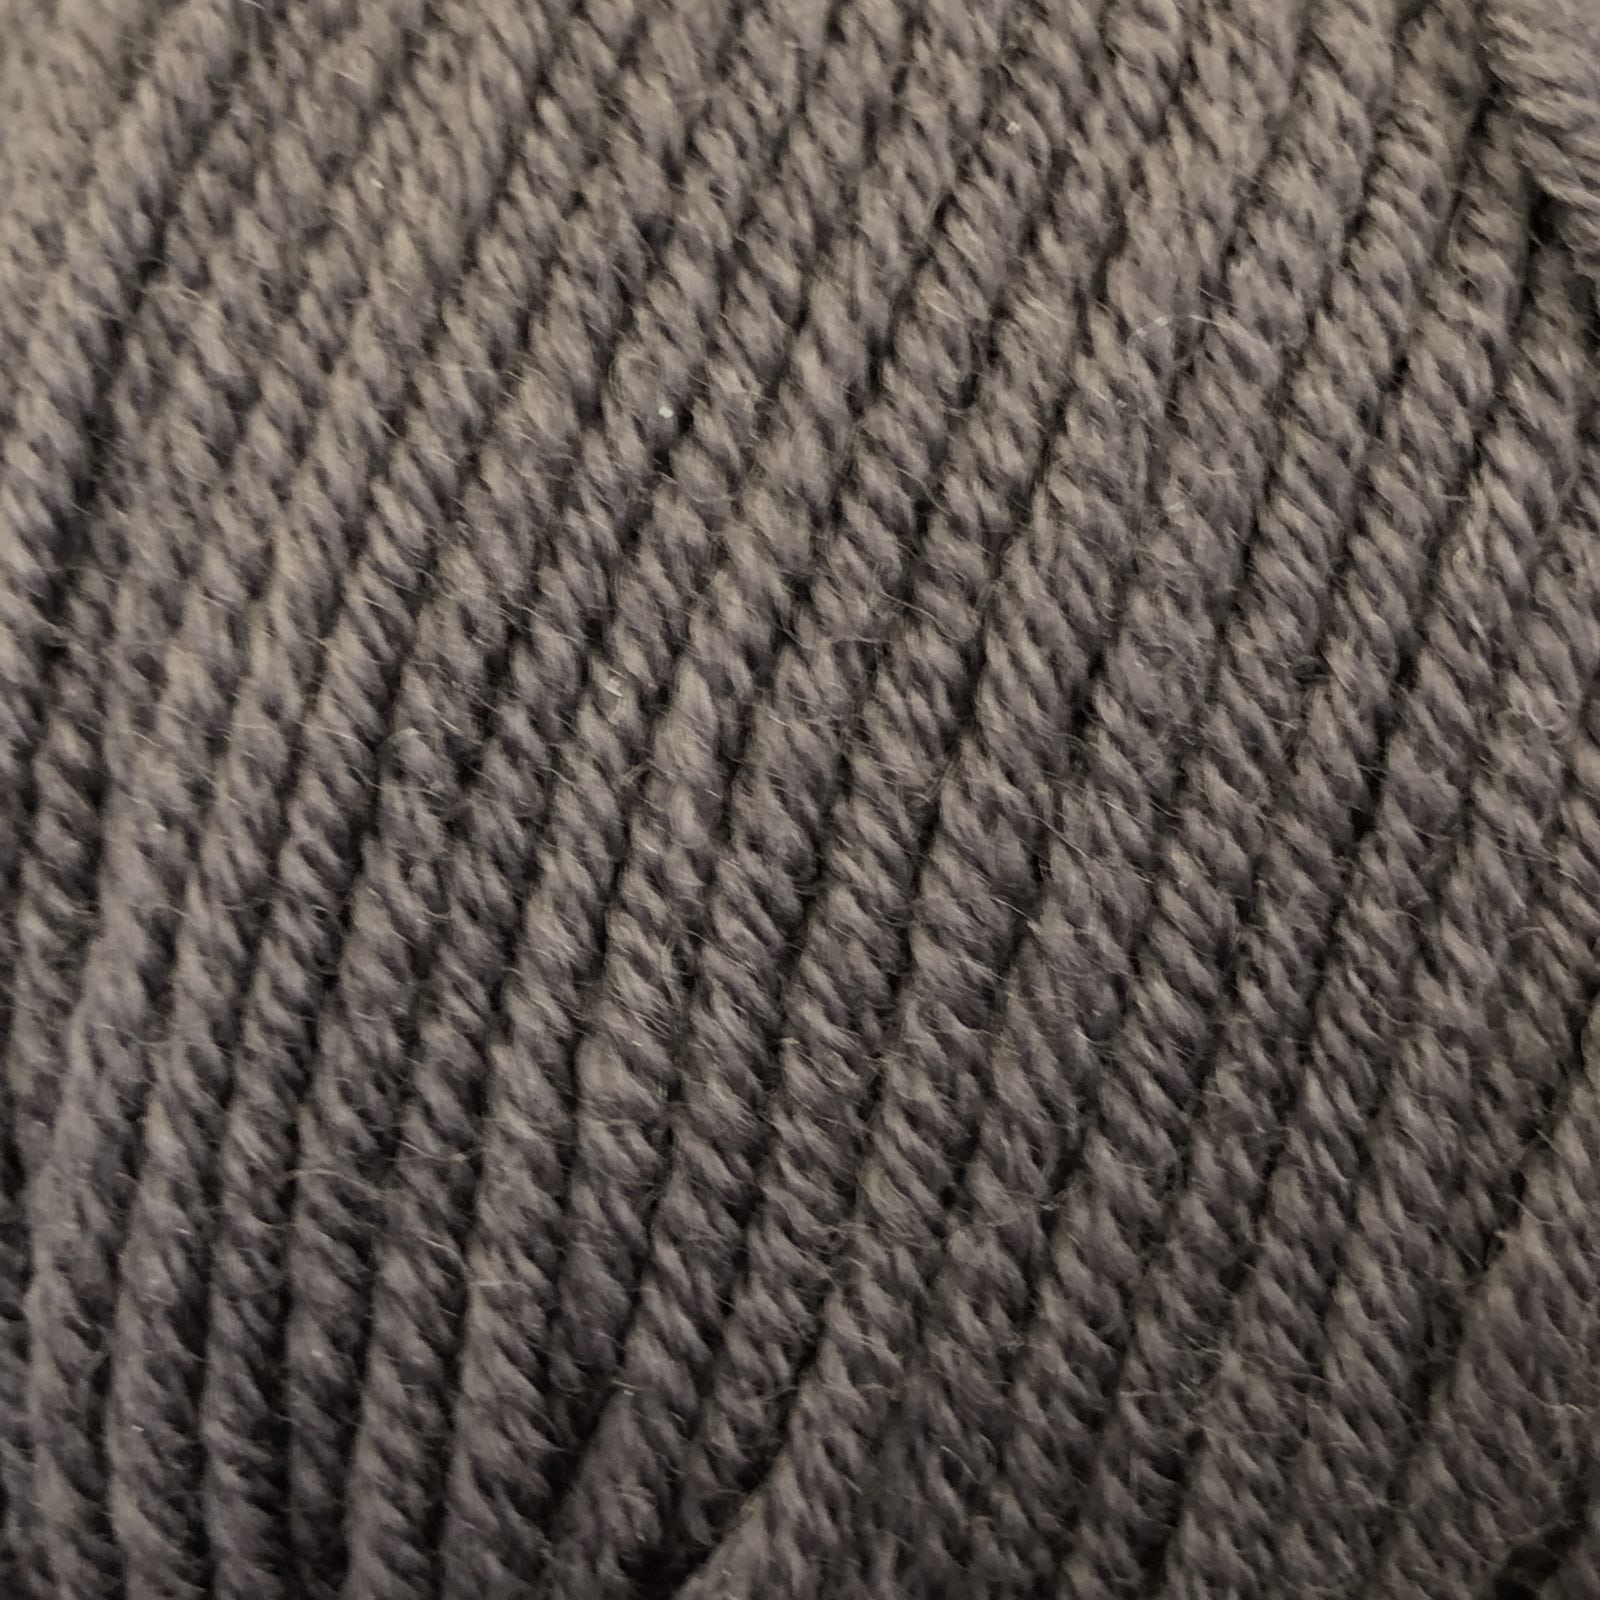 Broadway Yarns Merino 8ply double knit shade 1033